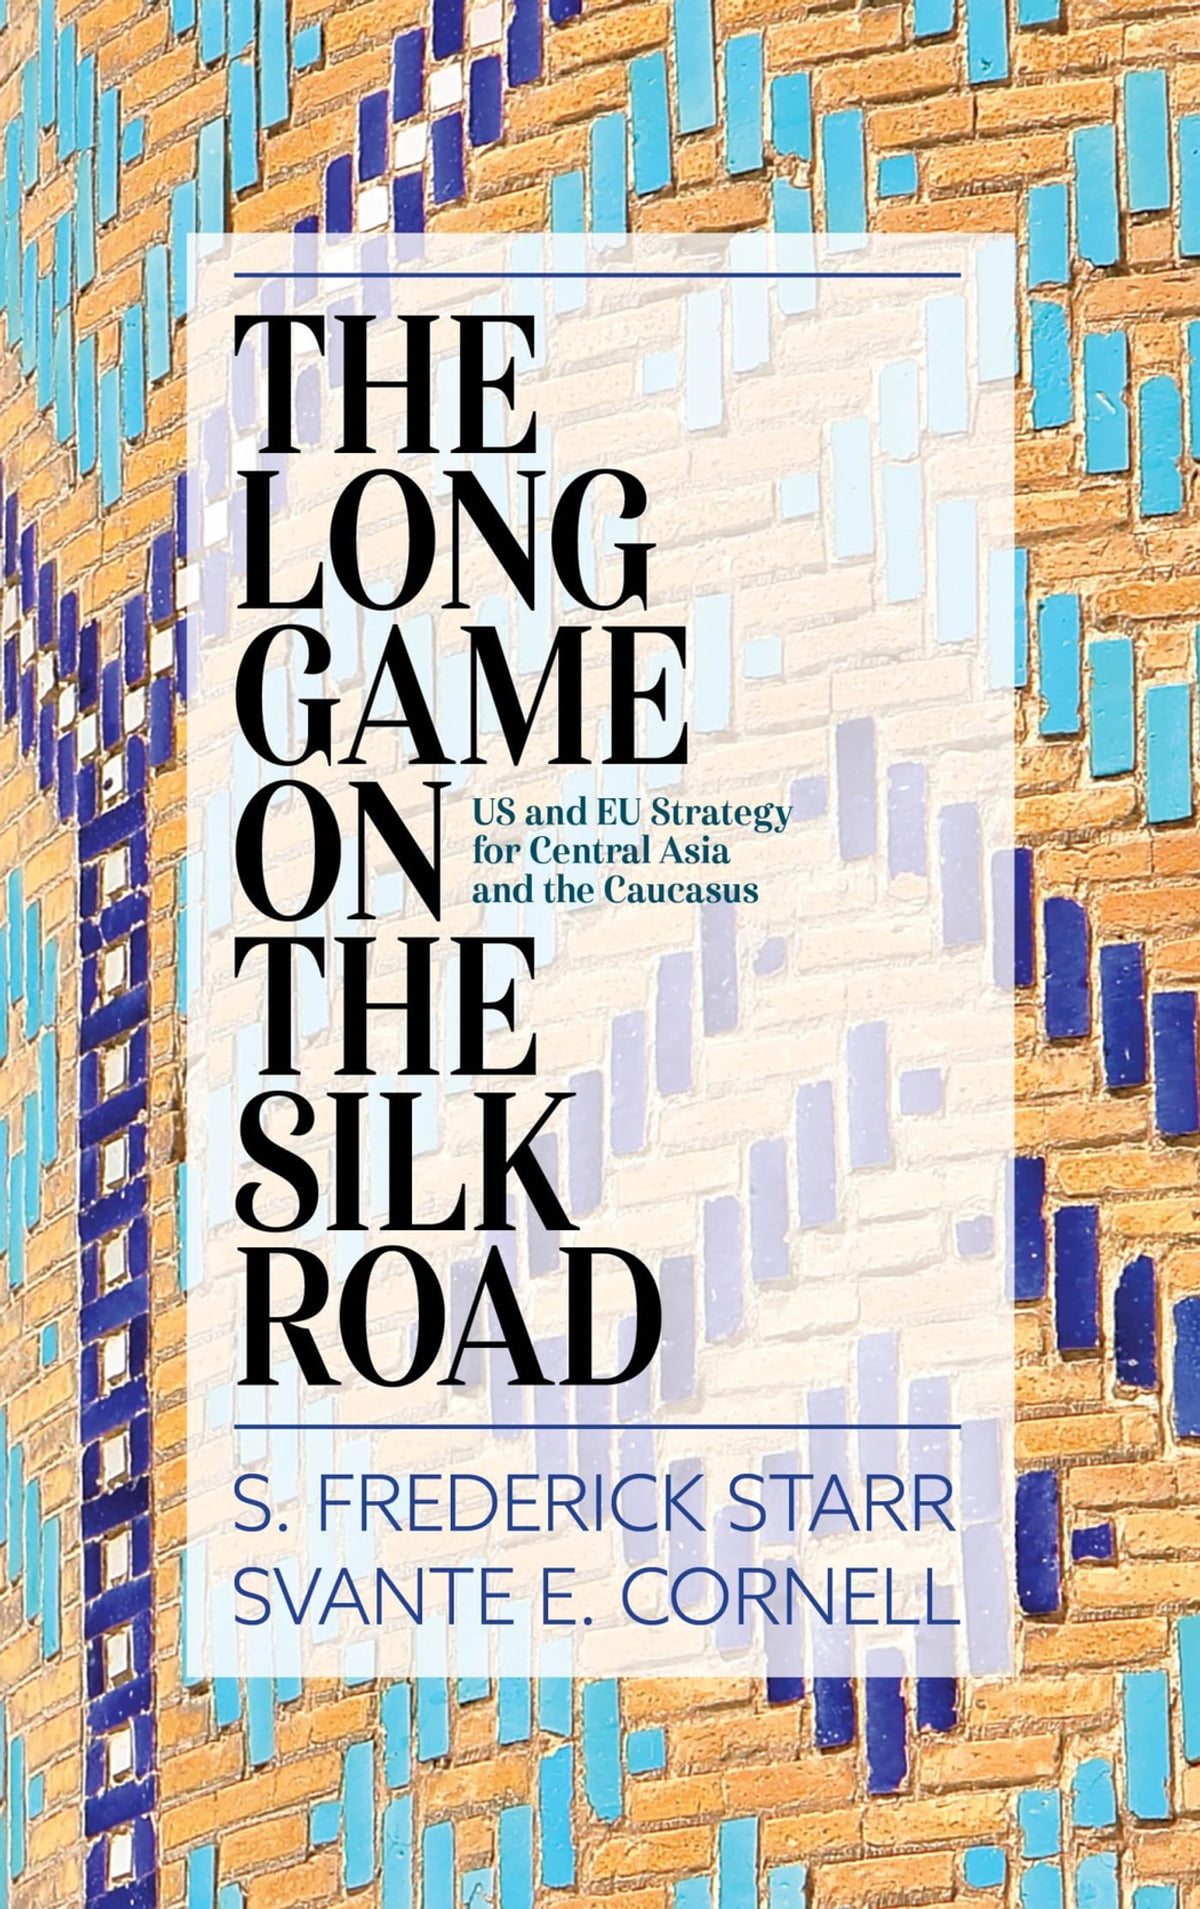 S. Frederick Starr - Svante E. Cornell: The Long Game on the Silk Road